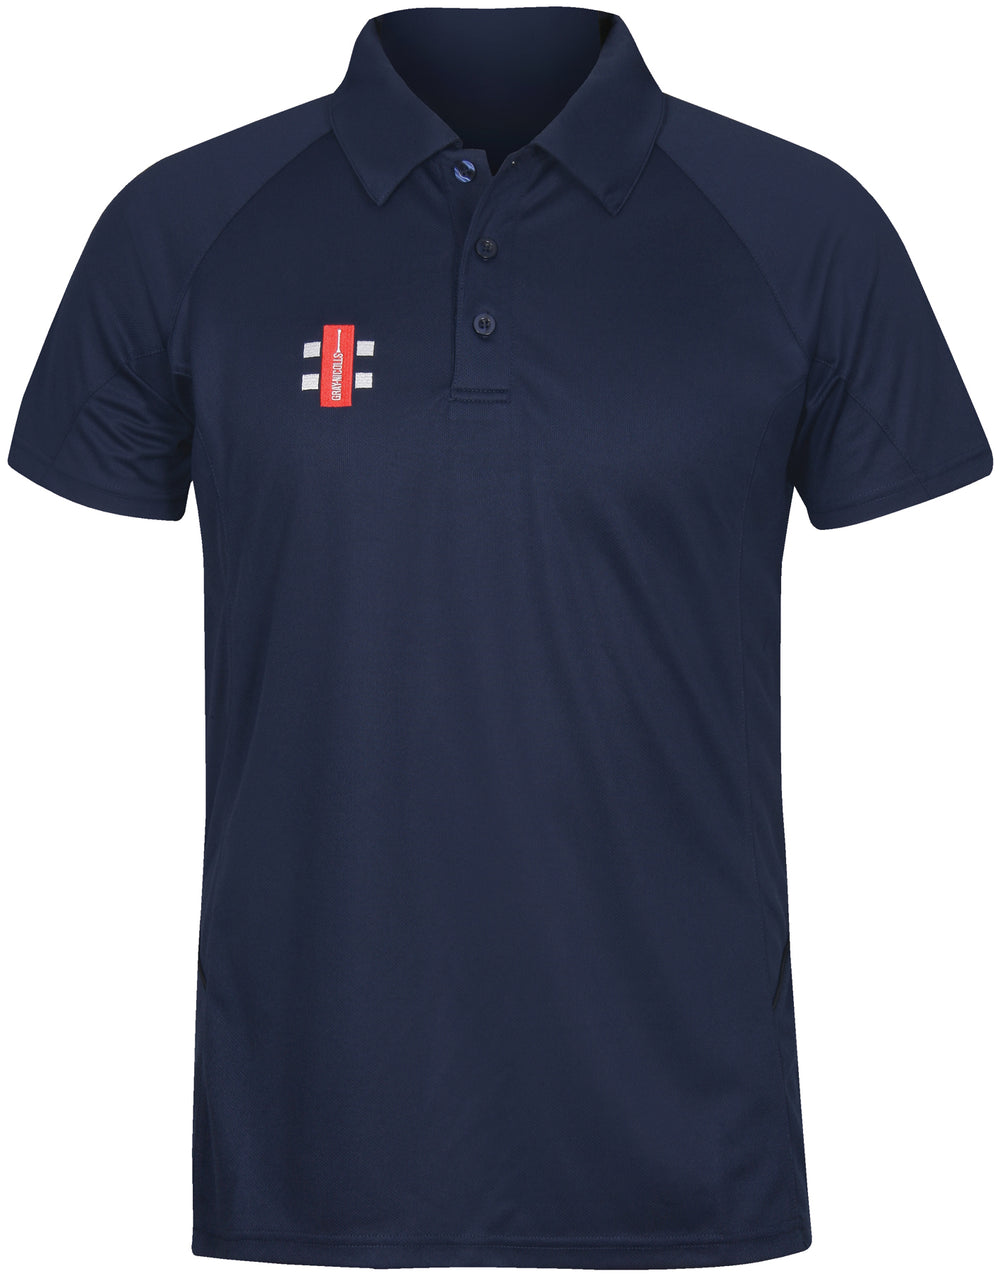 Hawkesbury Upton CC Matrix Junior Polo Shirt